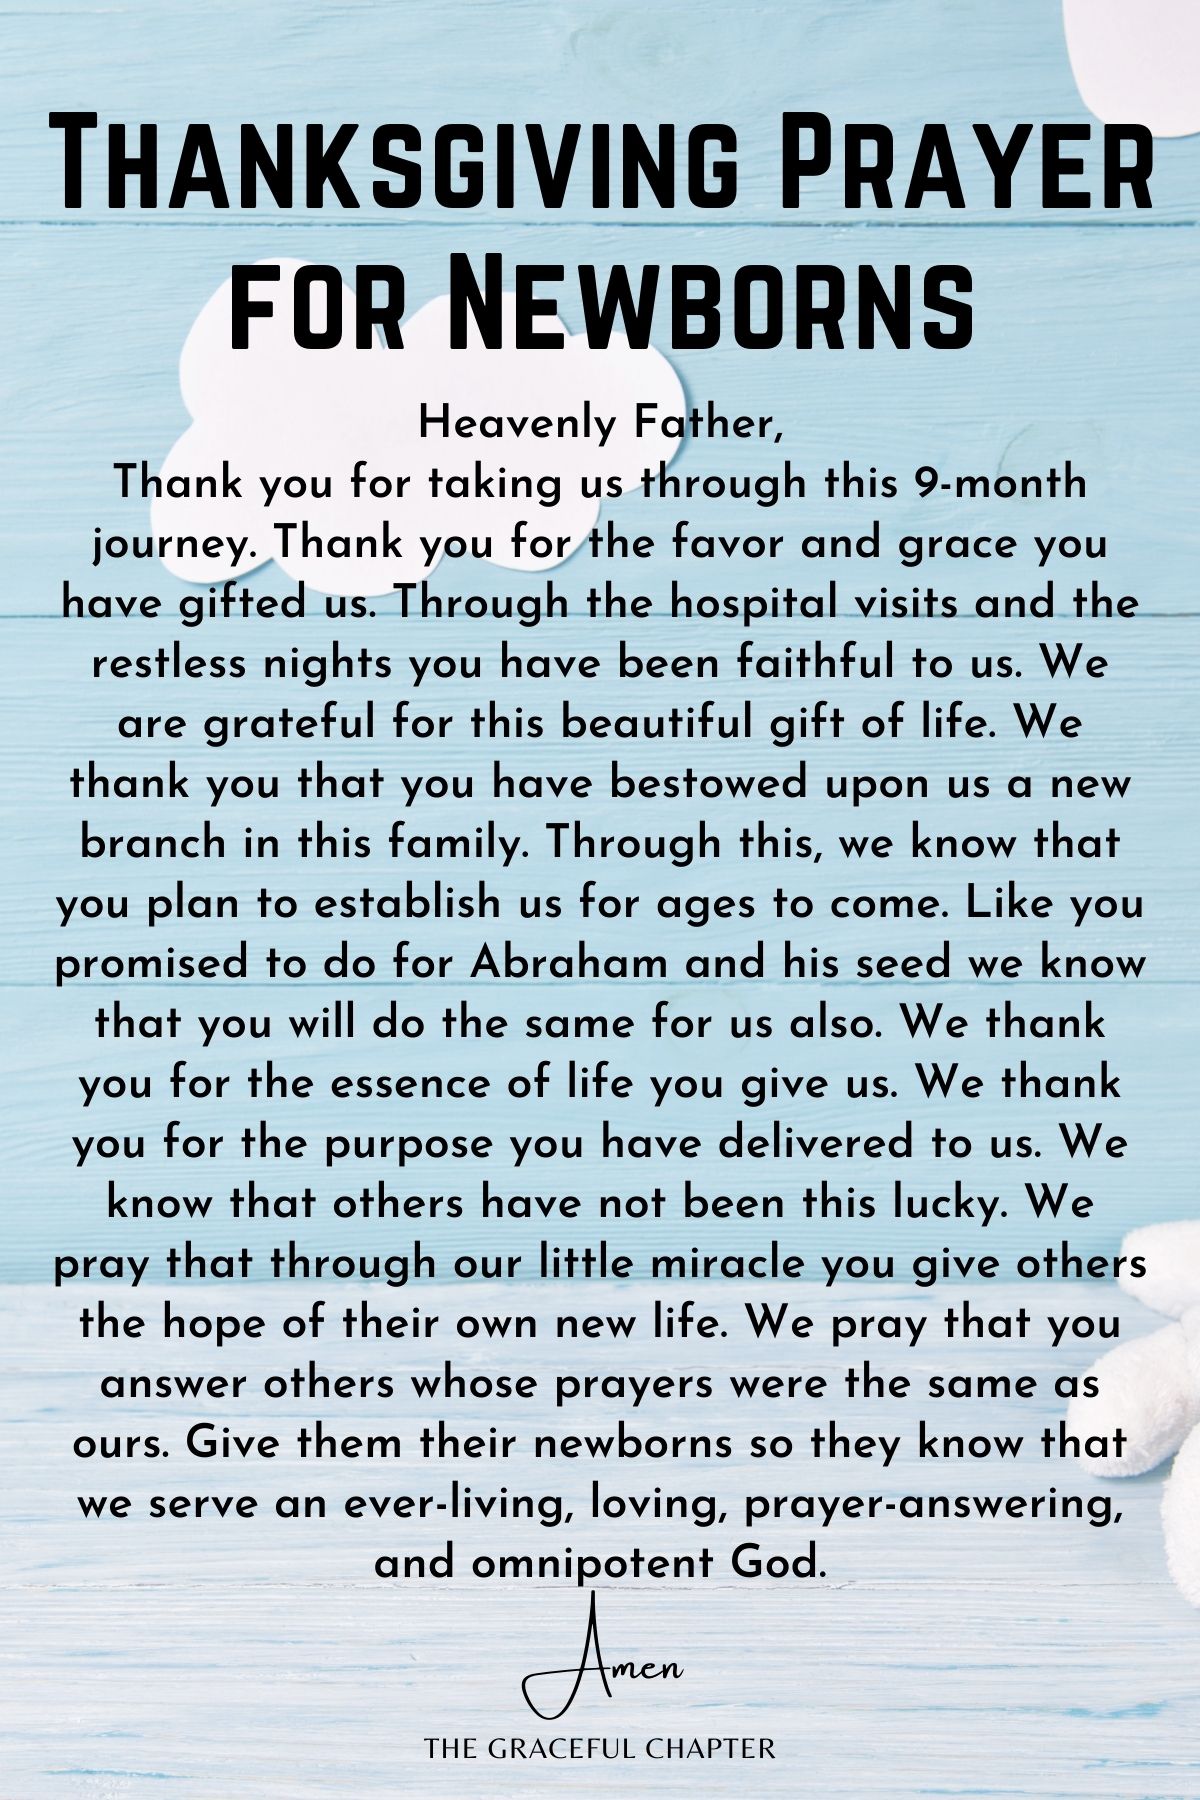 Thanksgiving prayer for newborns